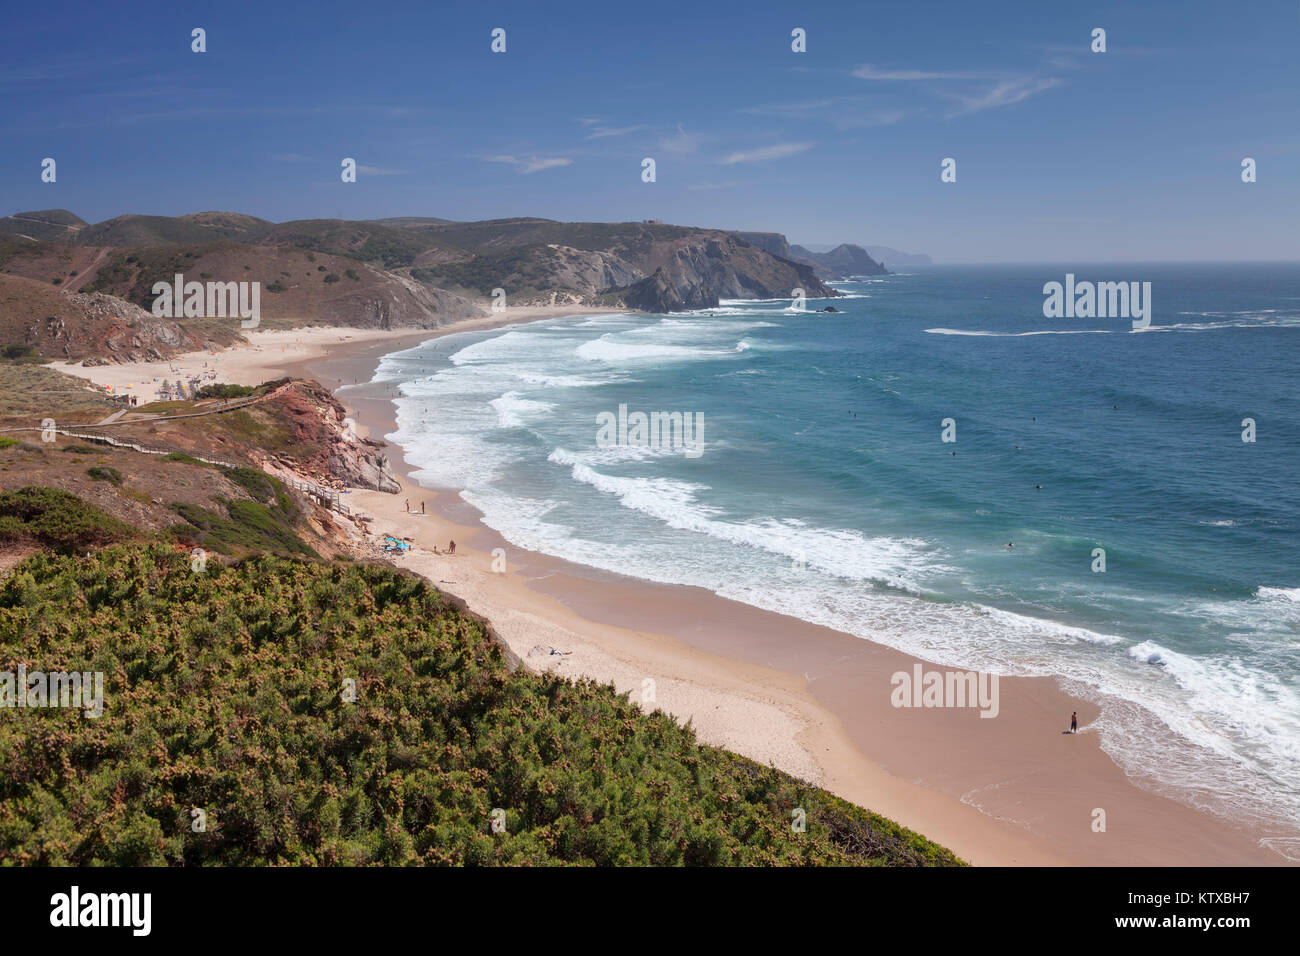 Praia do Amado beach, Carrapateira, Costa Vicentina, west coast, Algarve, Portogallo, Europa Foto Stock